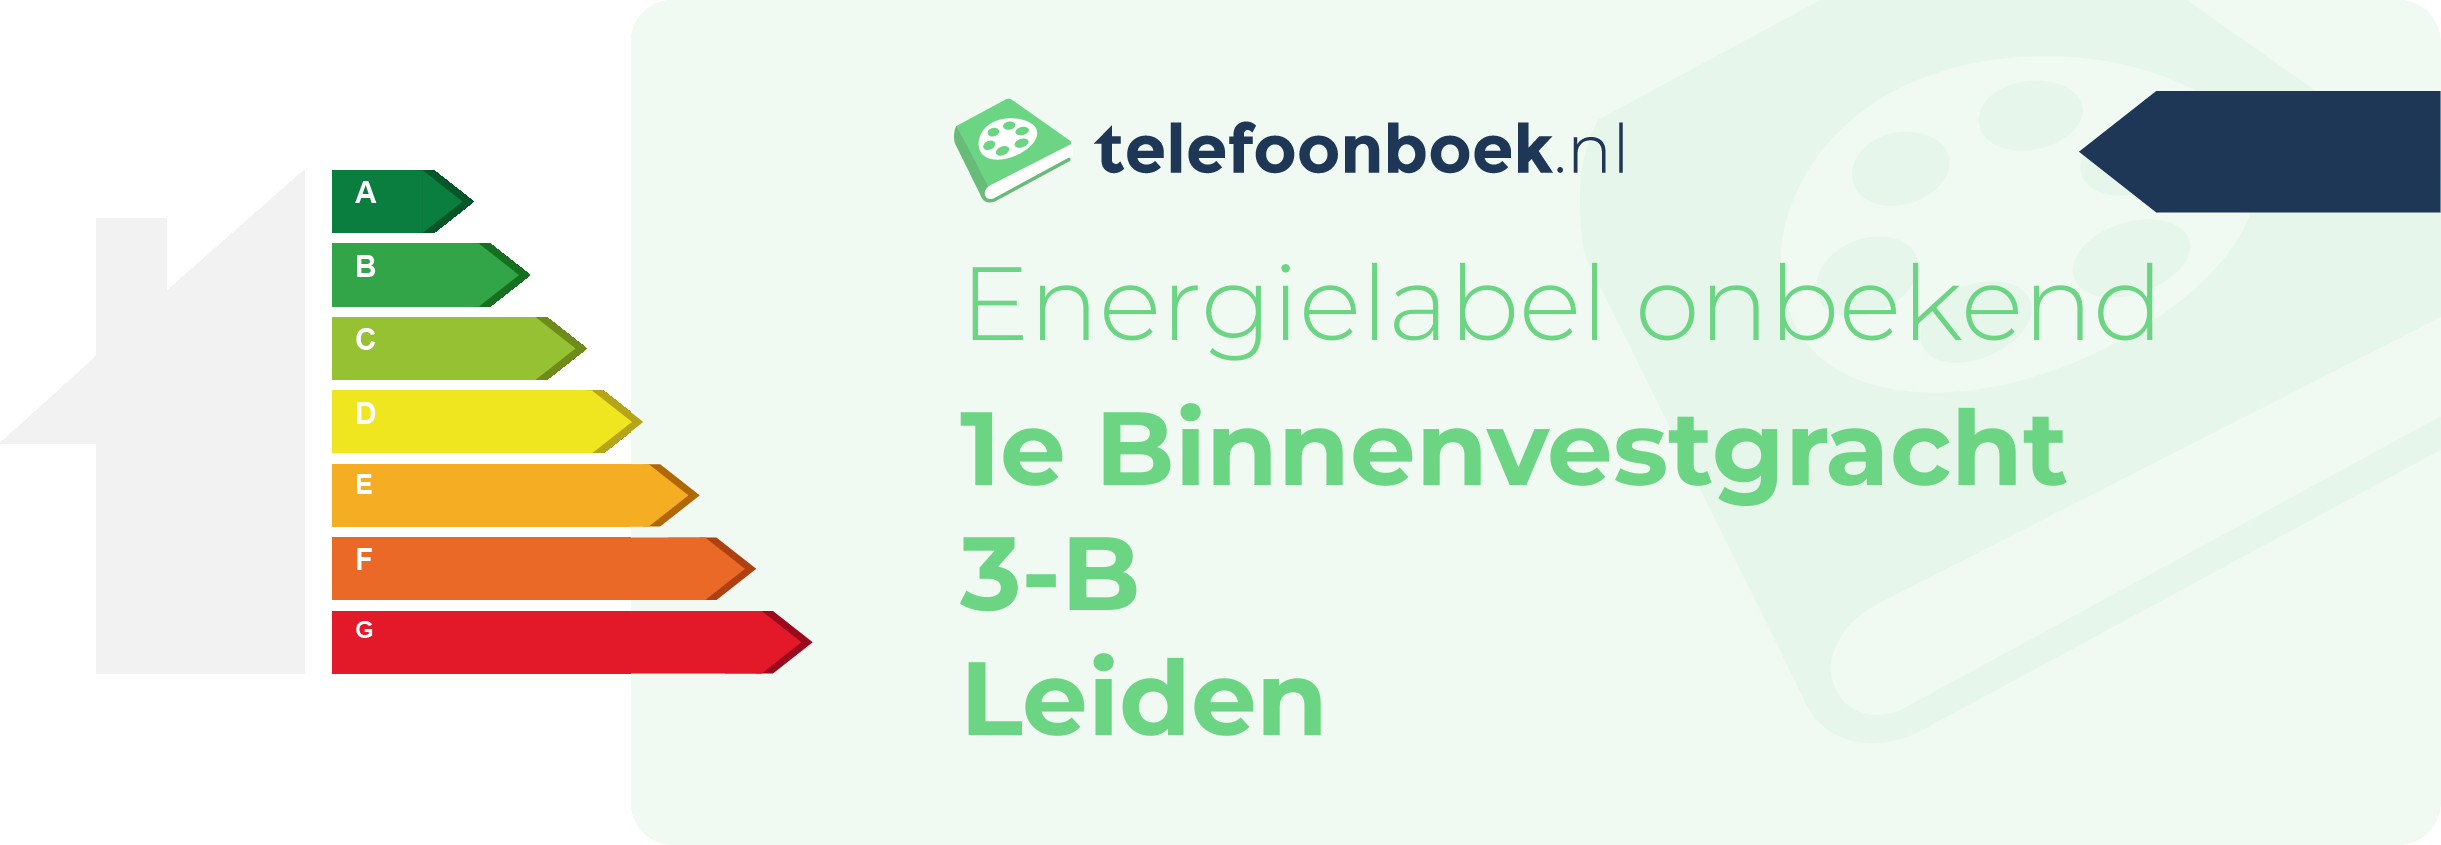 Energielabel 1e Binnenvestgracht 3-B Leiden